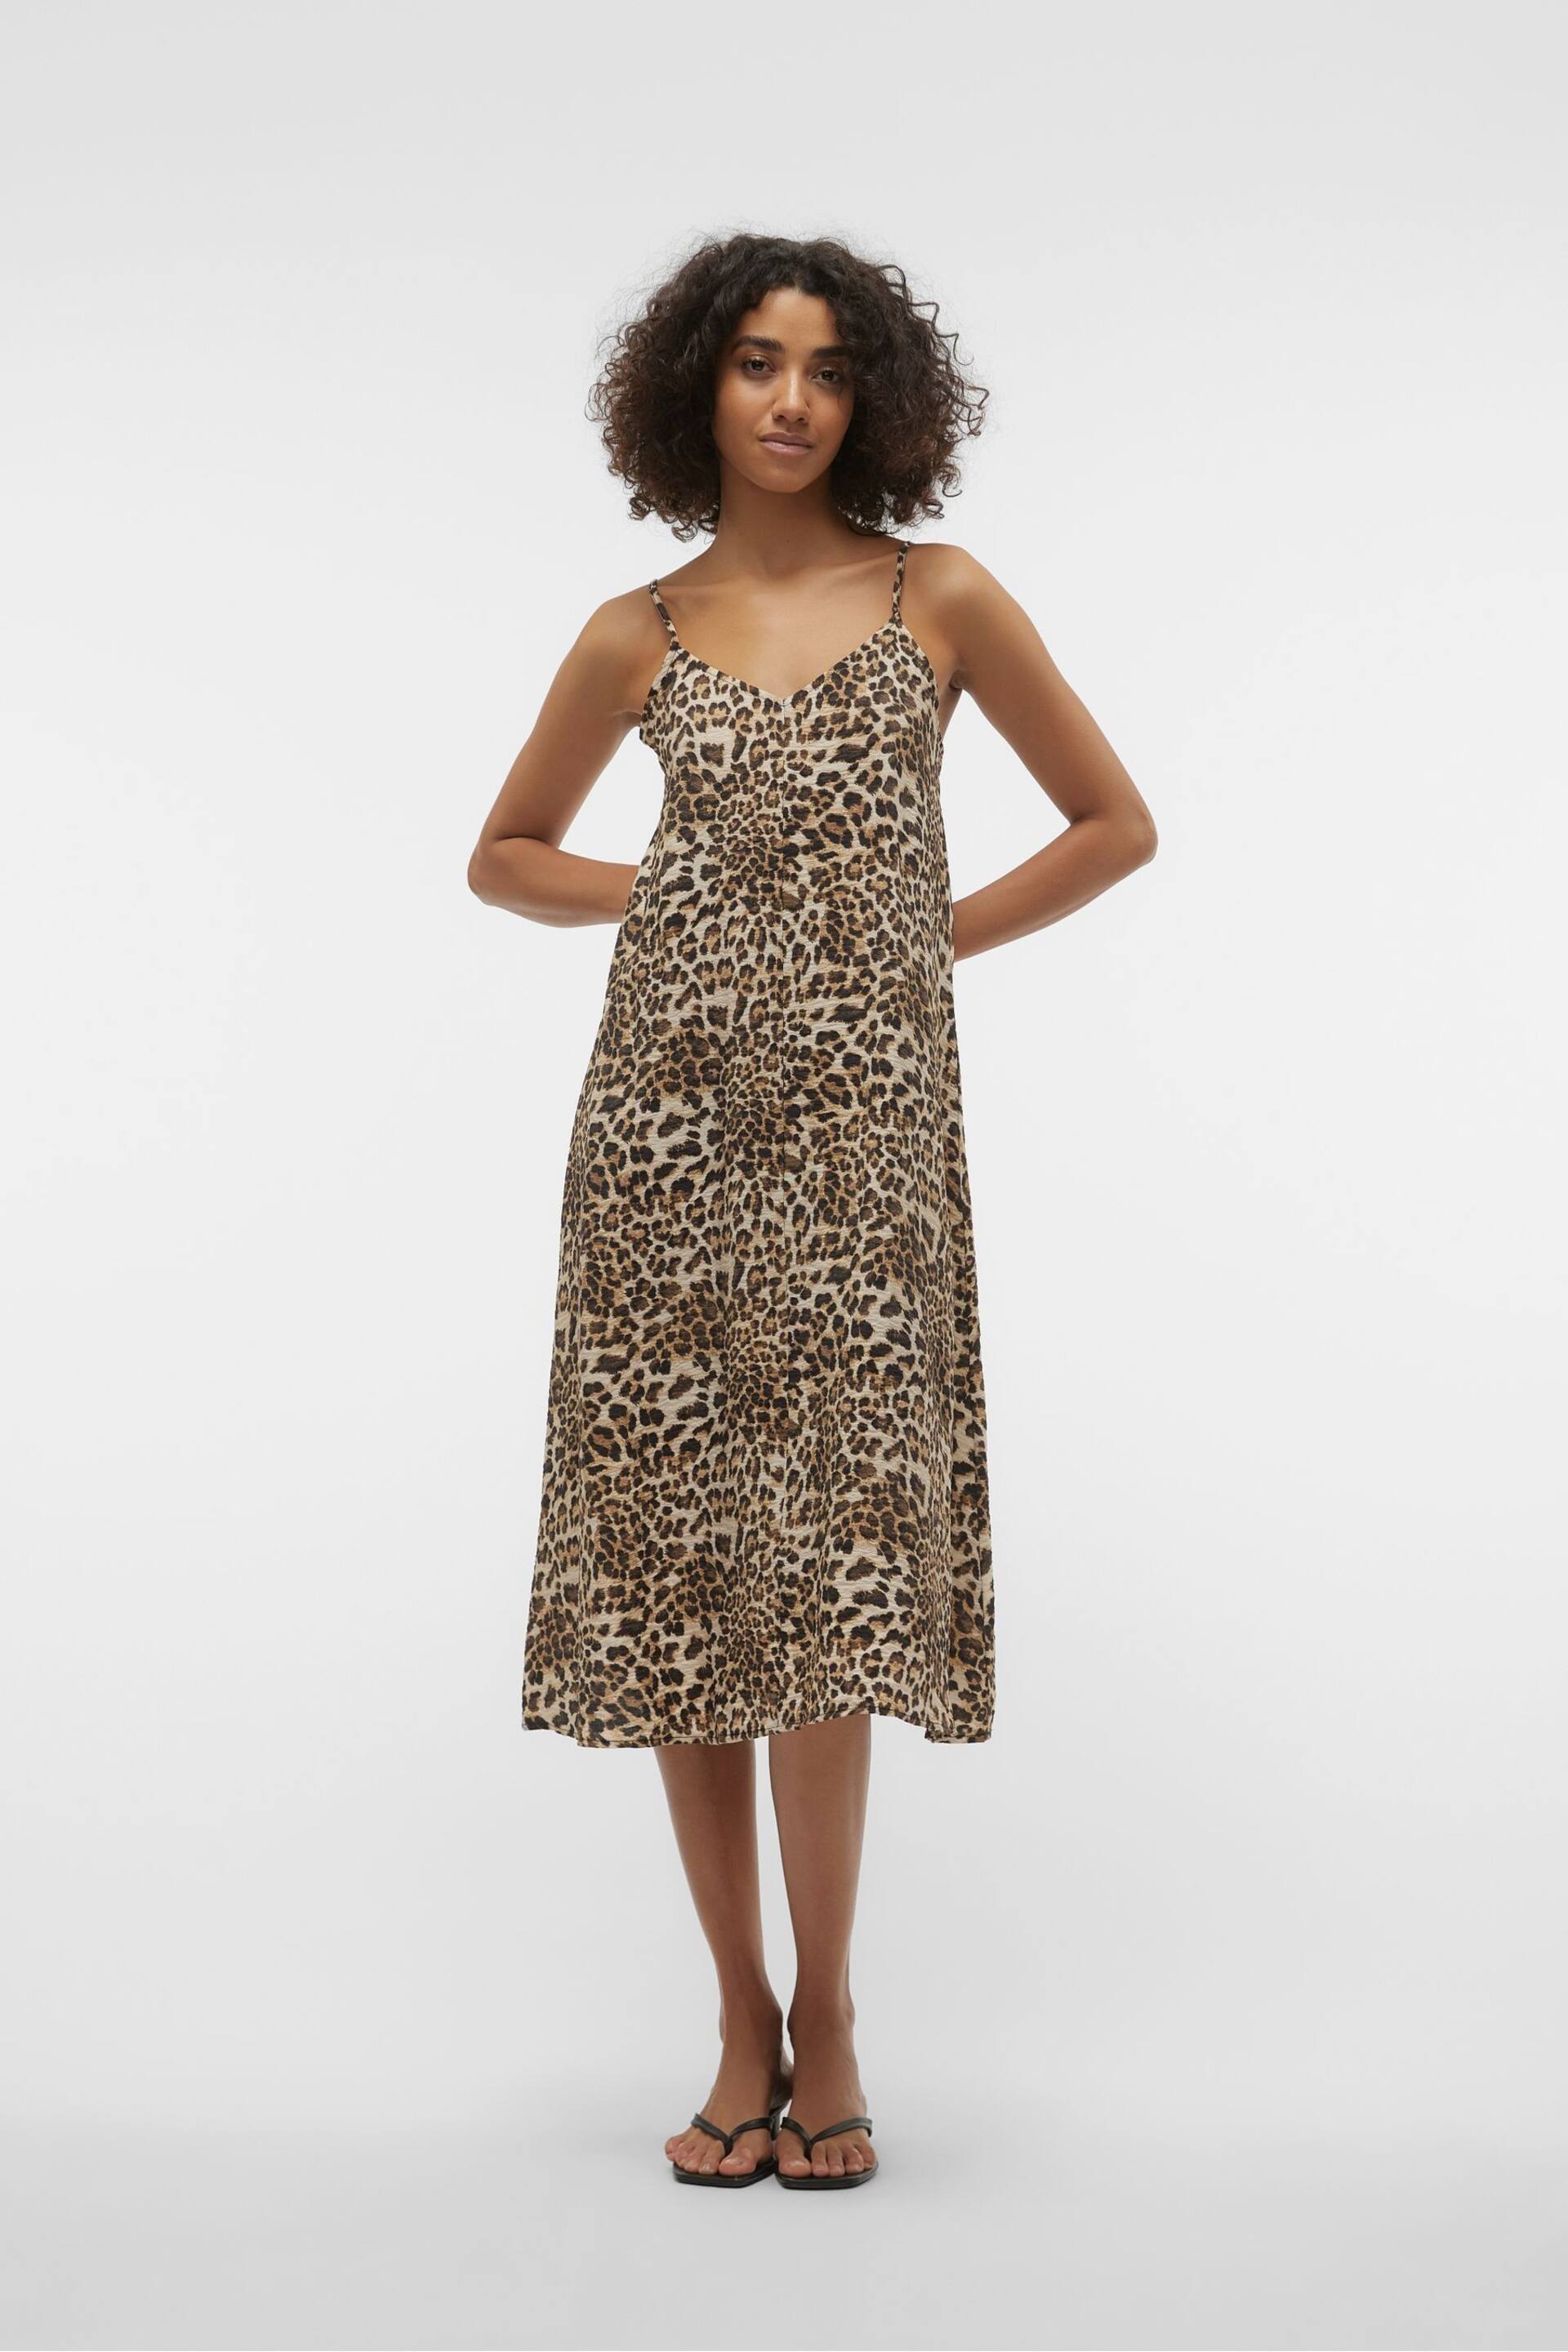 VERO MODA Brown Leopard Print Midi Cami Summer Dress - Image 2 of 7